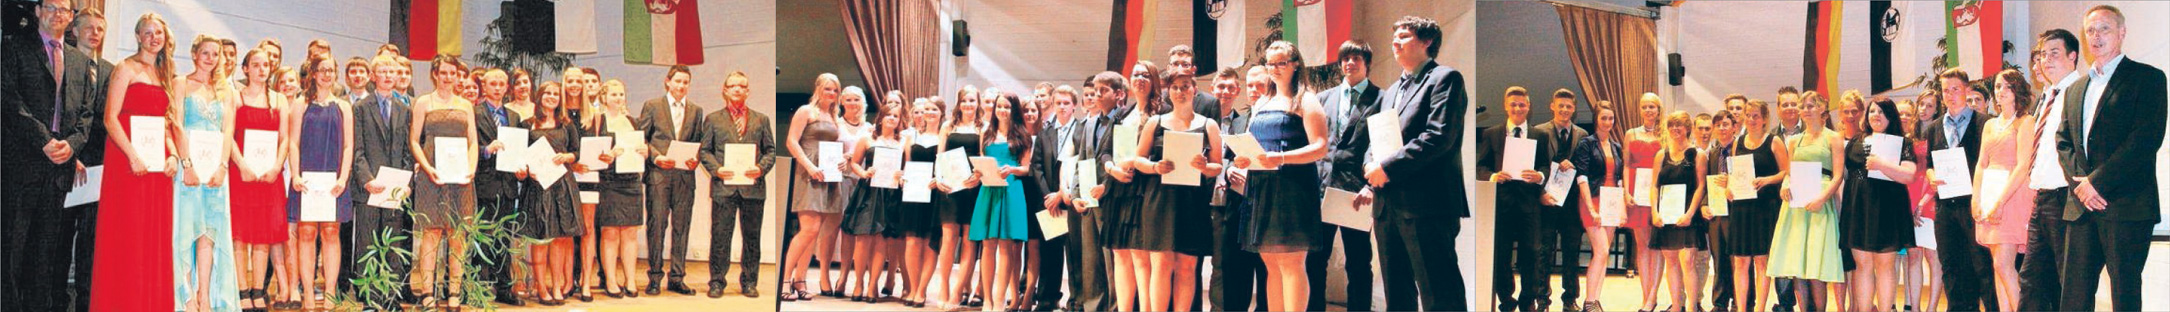 Realschule Schloss Wittgenstein verabschiedet 86 Schüler